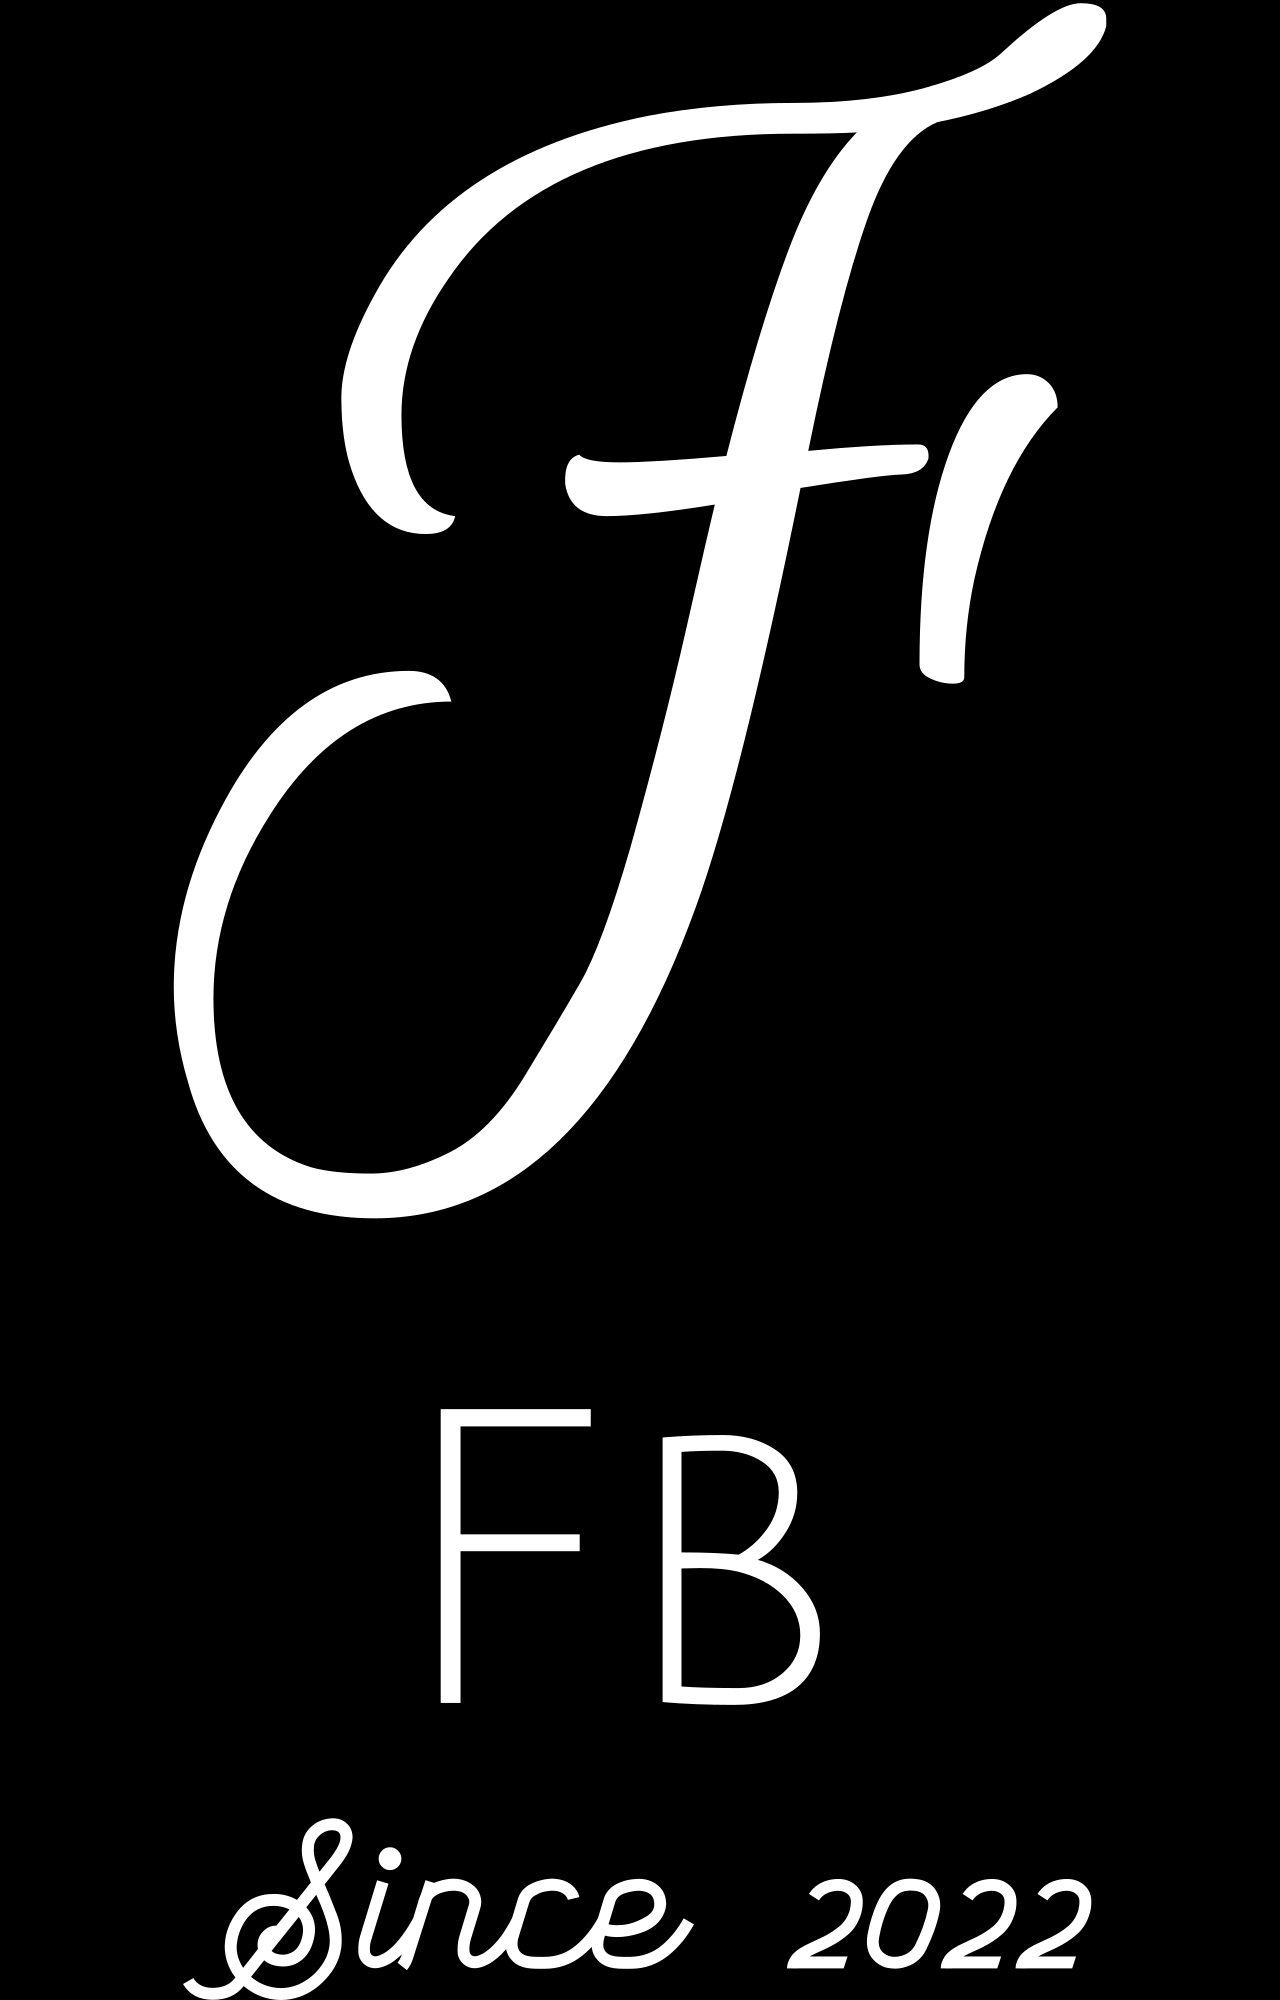 Fb's logo